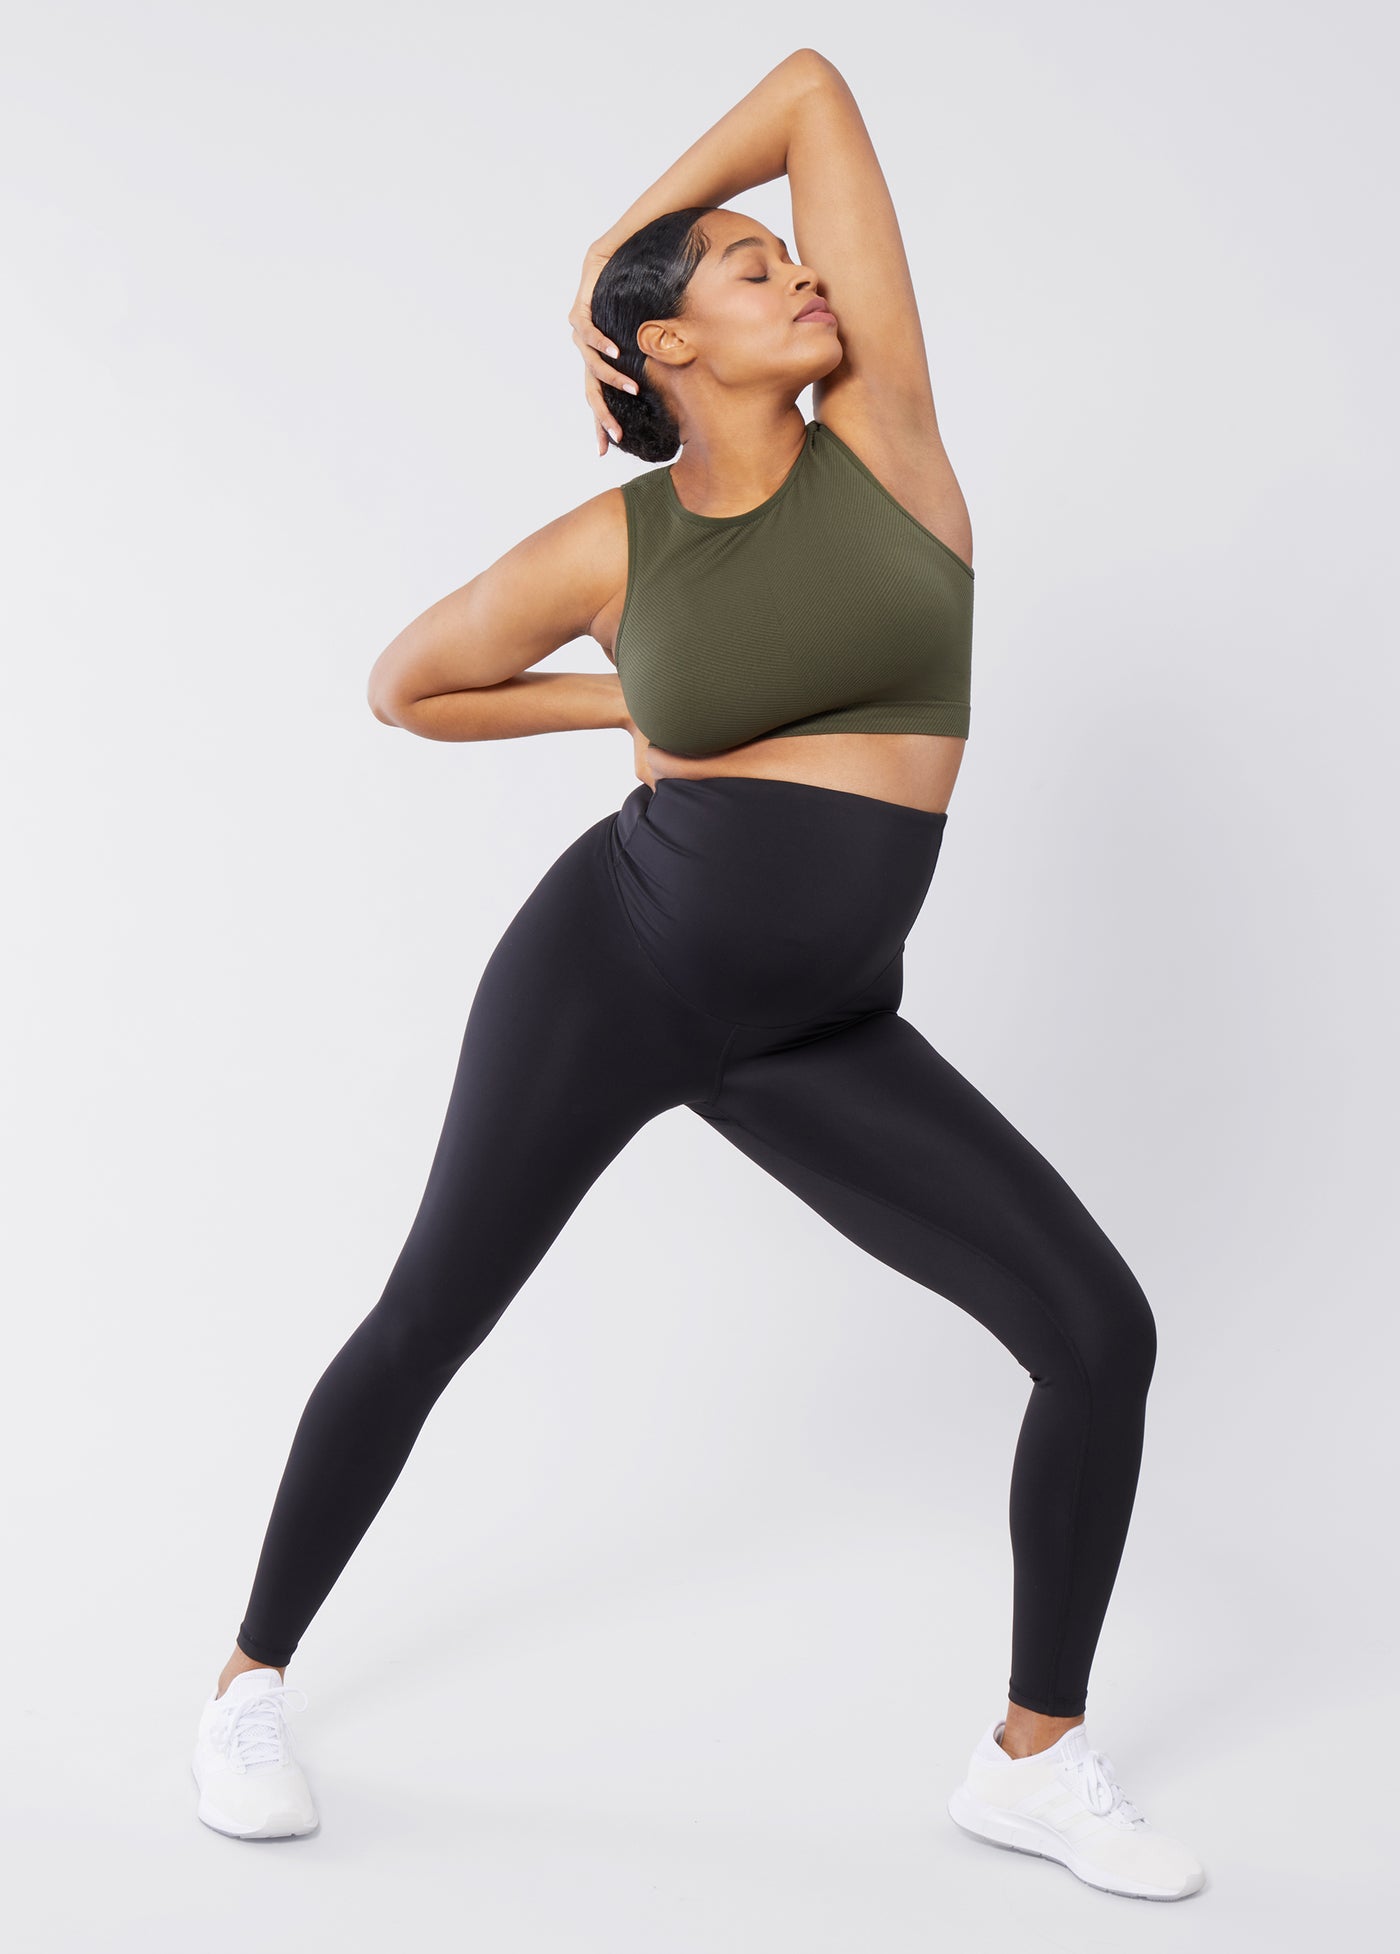 TNNZEET Leggings for Women, Black High Waisted Plus Size Maternity Workout  Yoga Pants - Hunt